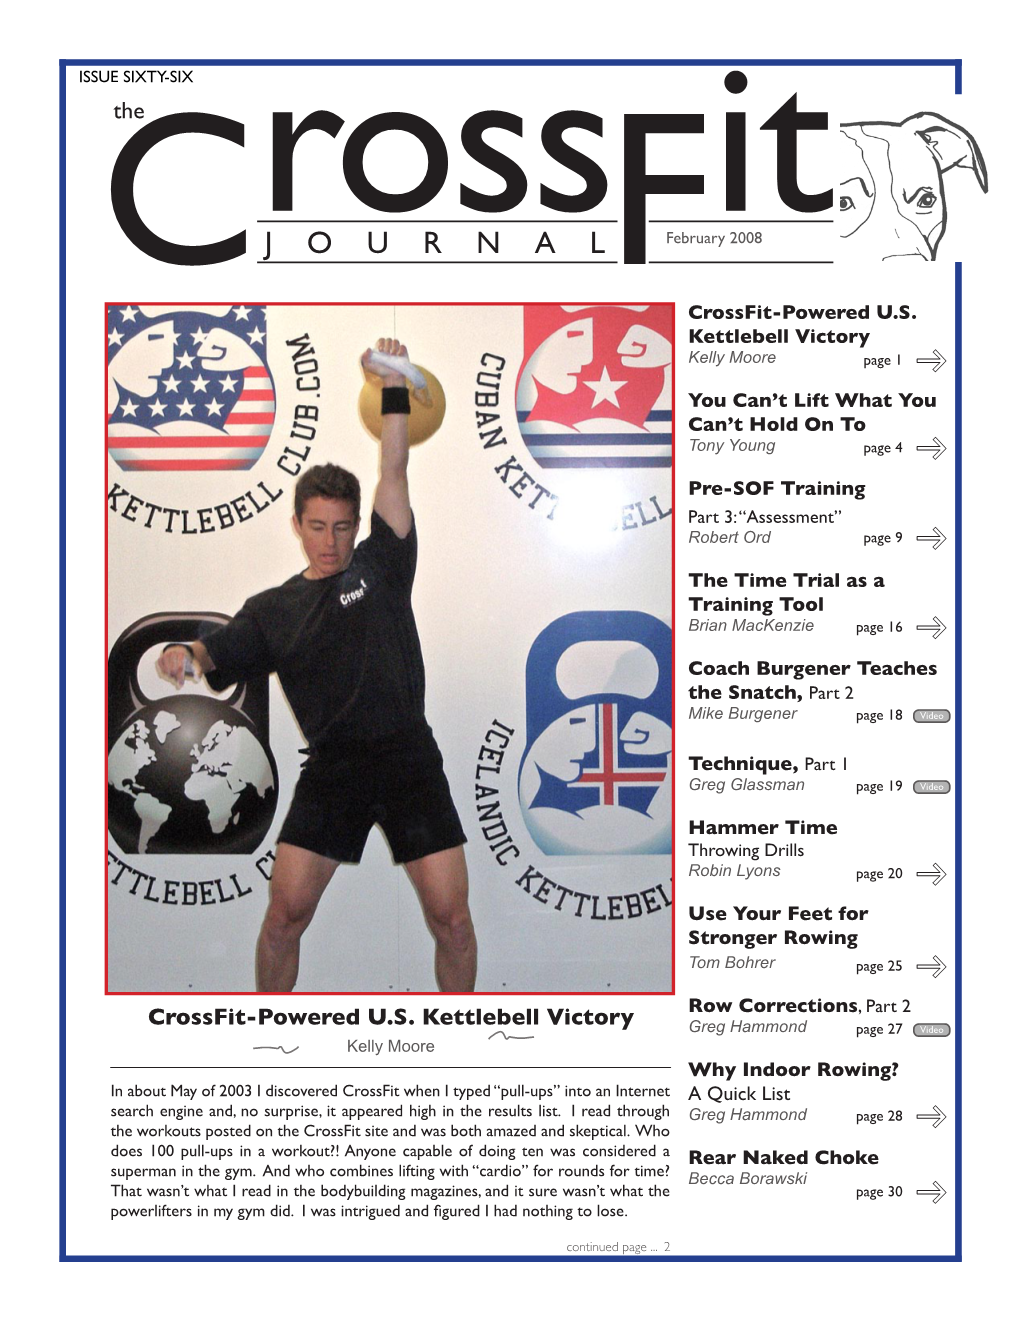 Crossfit-Powered U.S. Kettlebell Victory Kelly Moore Page 1